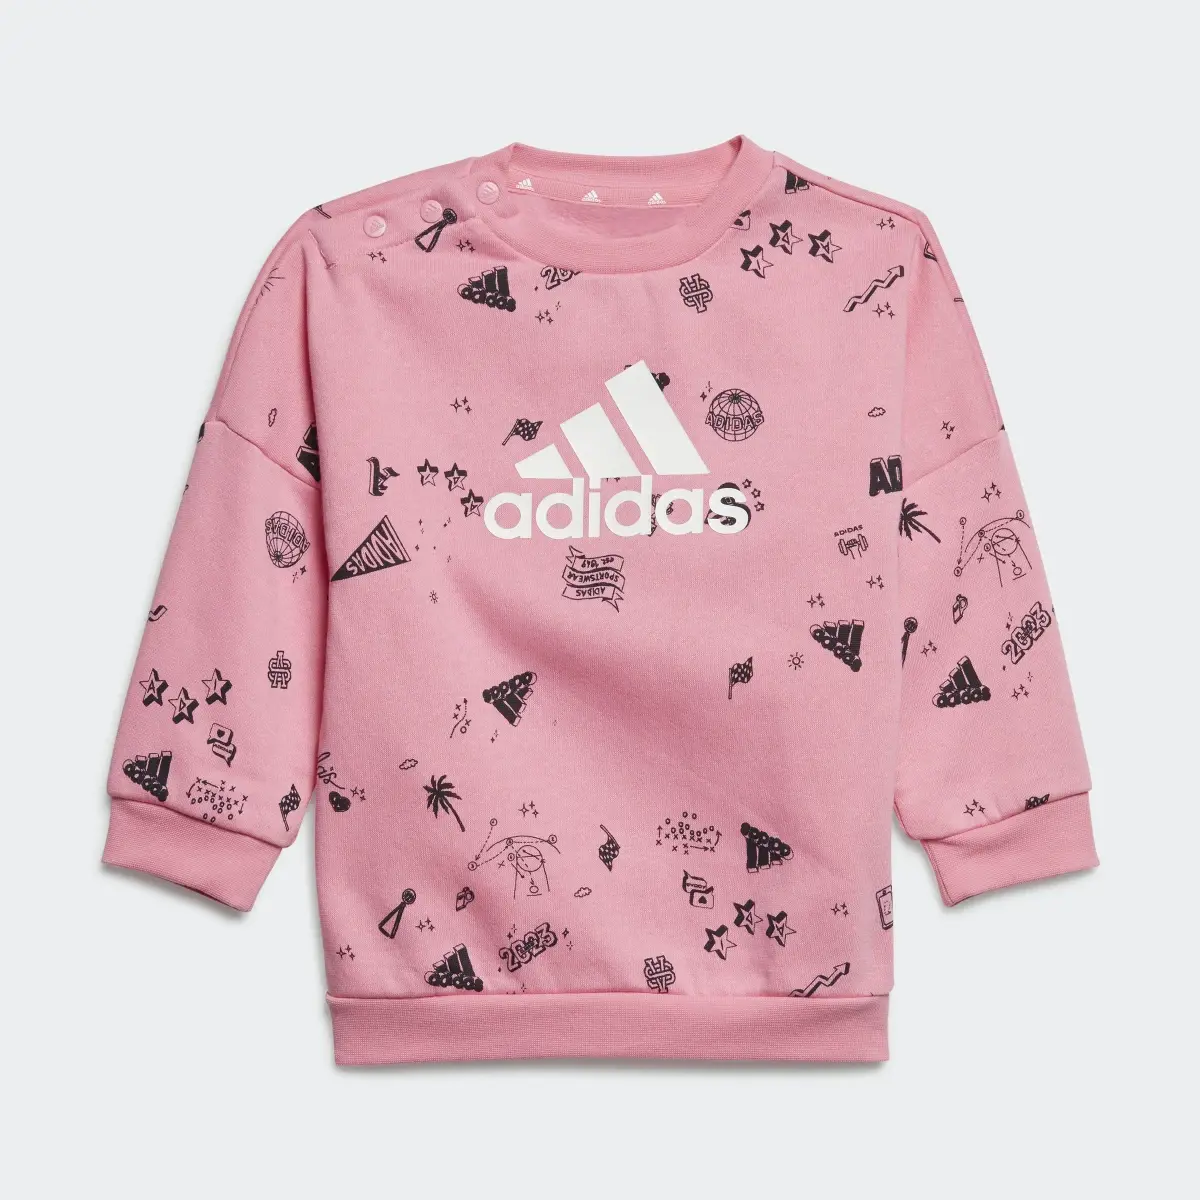 Adidas Brand Love Crew Sweatshirt Set Kids. 3